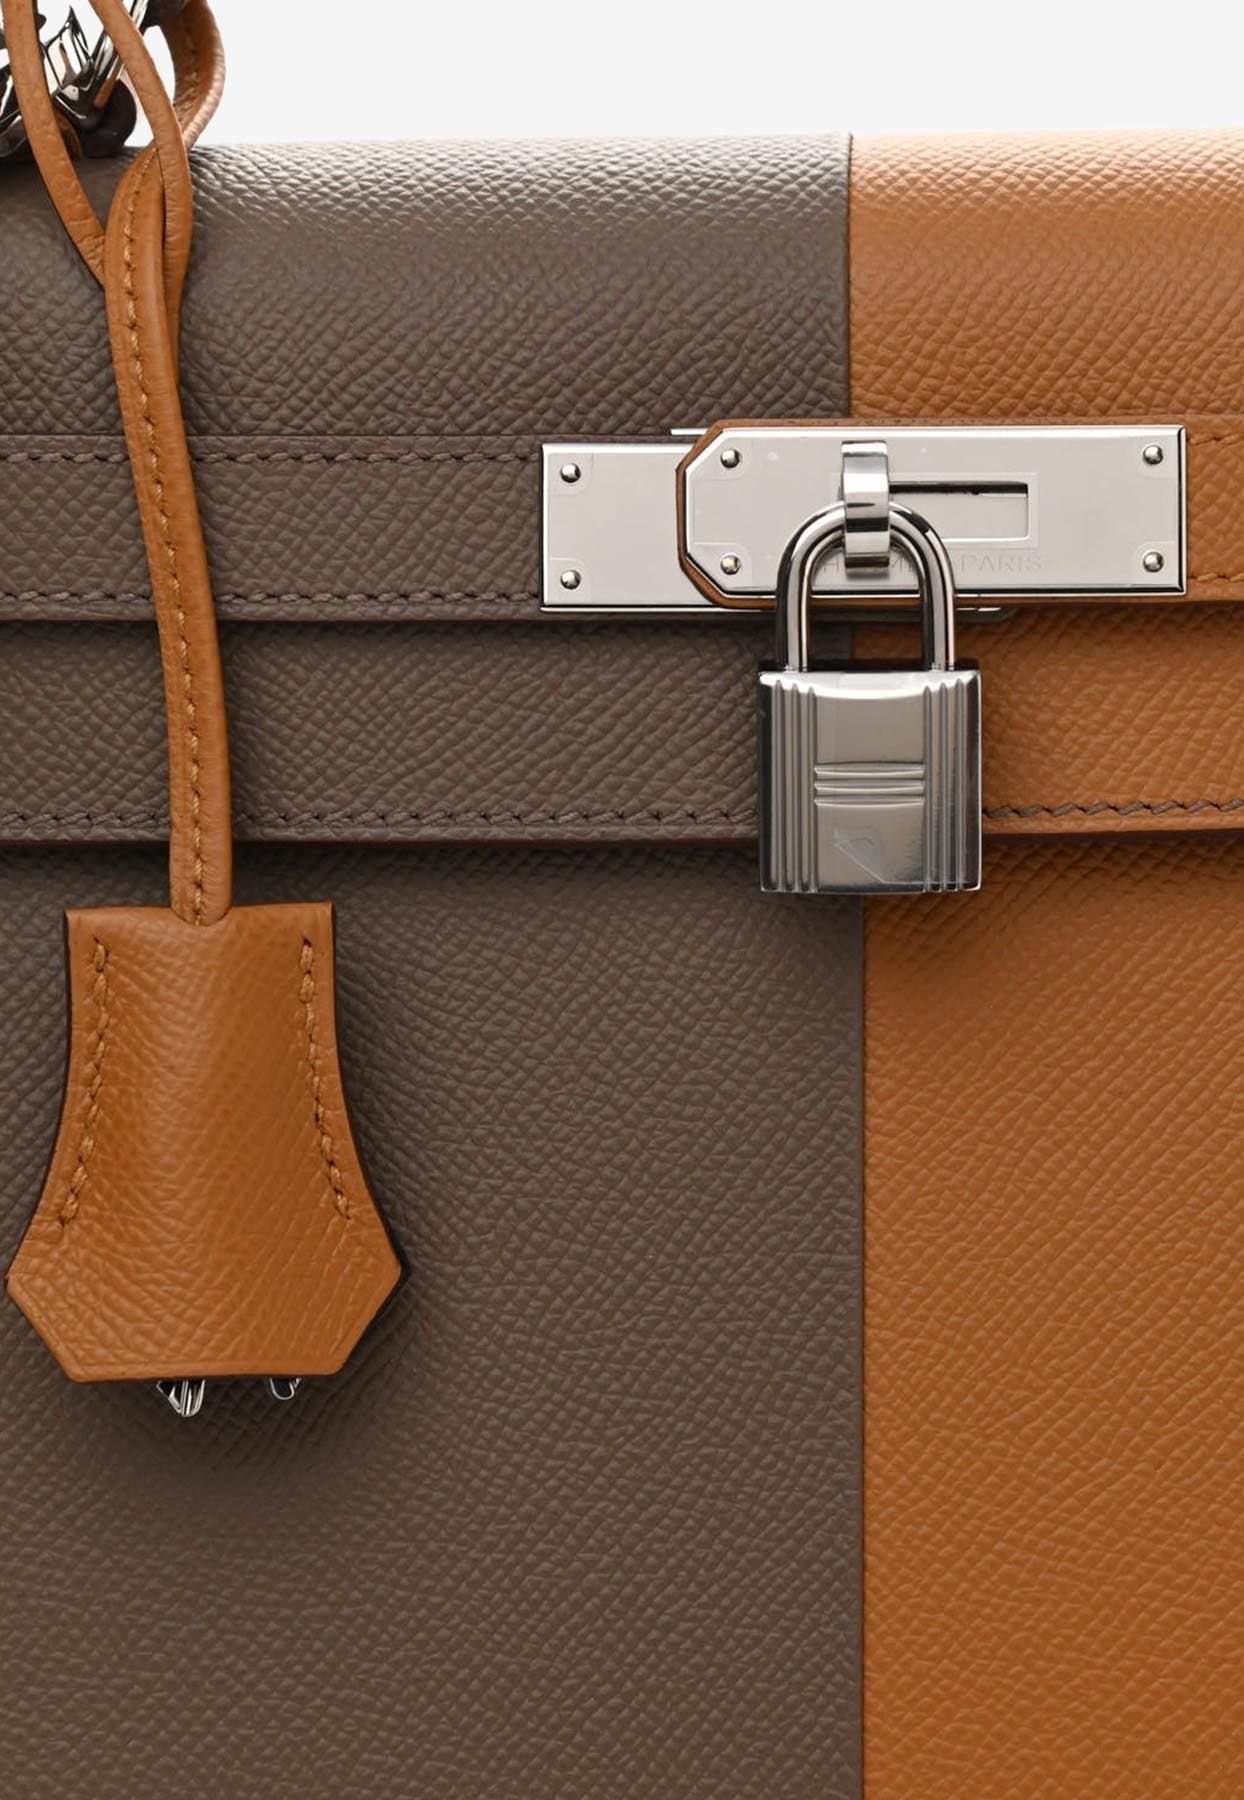 Hermes Kelly bag 32 Retourne Sesame Clemence leather Gold hardware